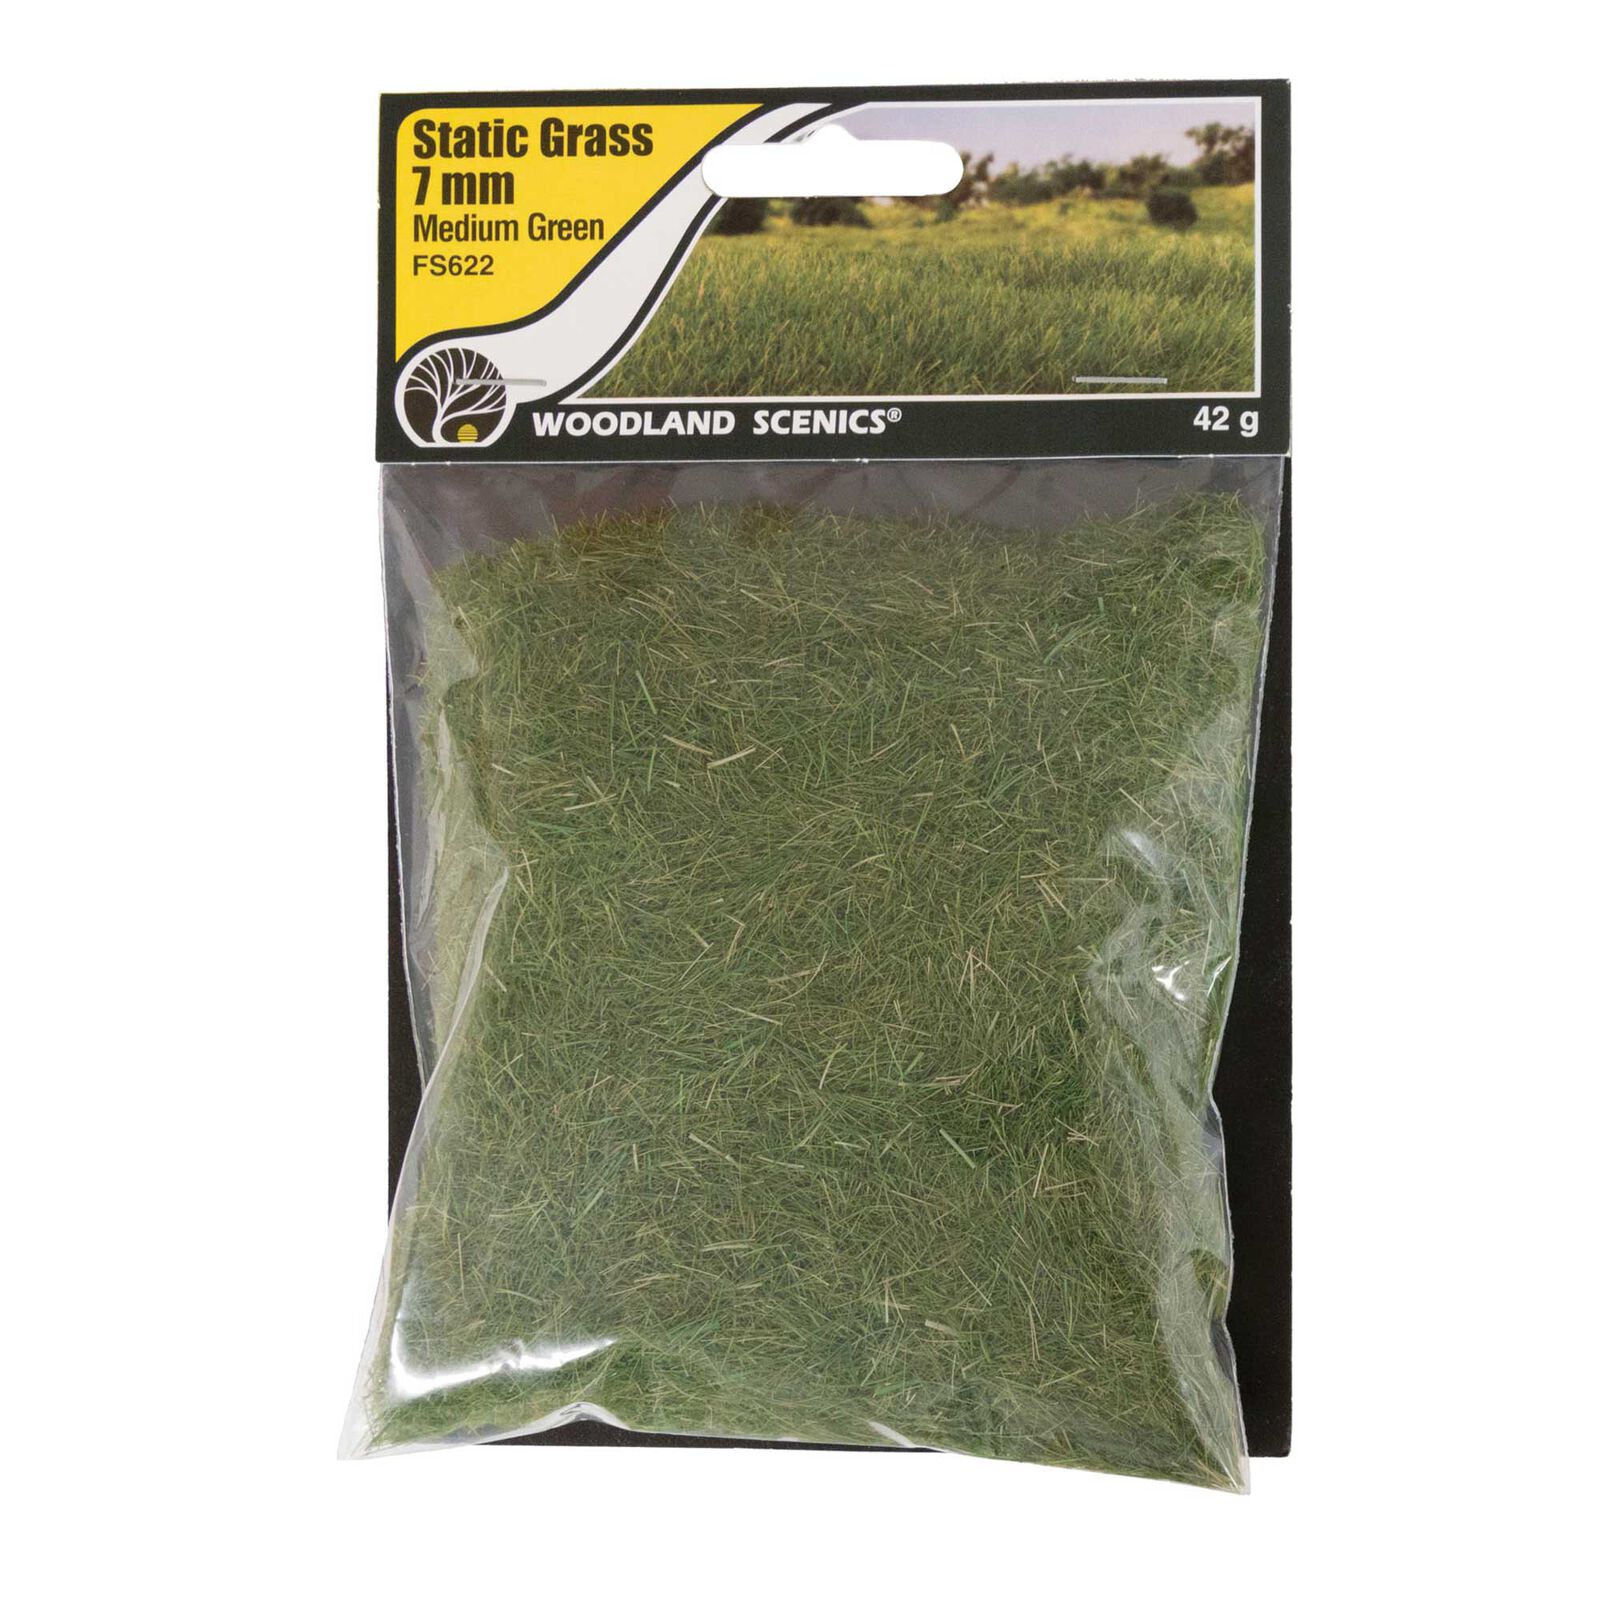 Static Grass Medium Green 7mm